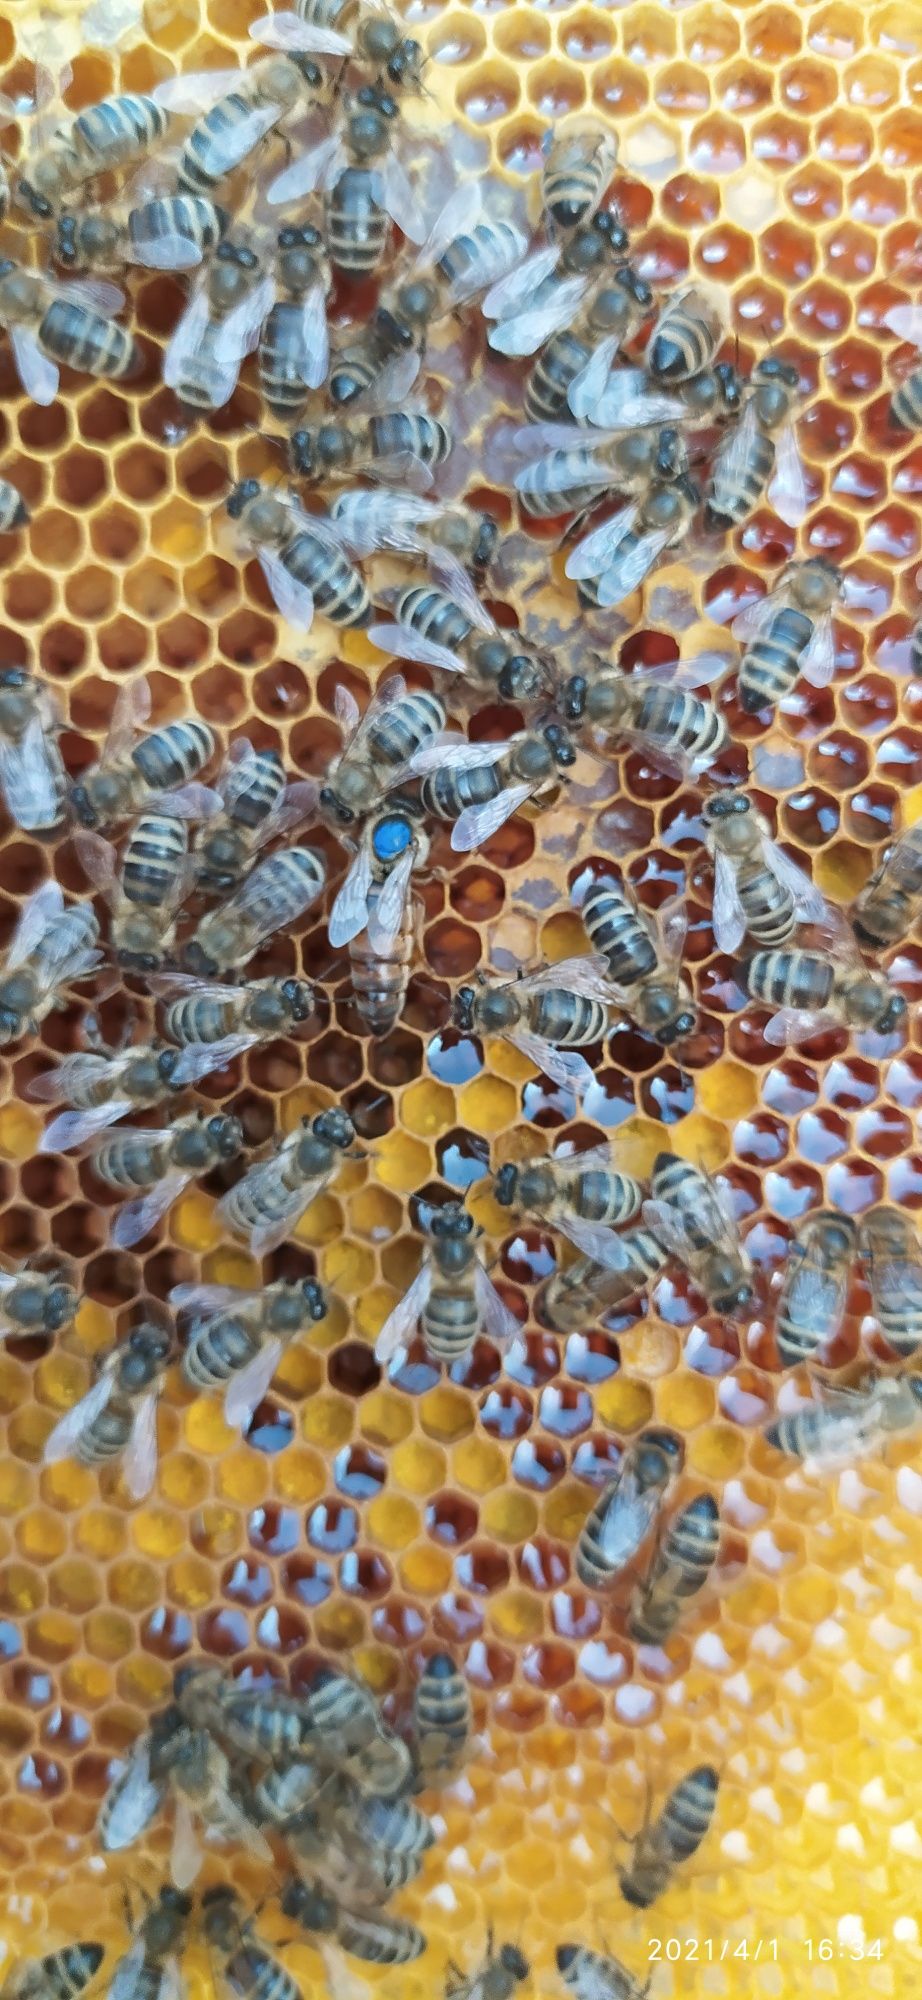 Бджолопакети Чернівецька обл на рамку, Дадана Блата